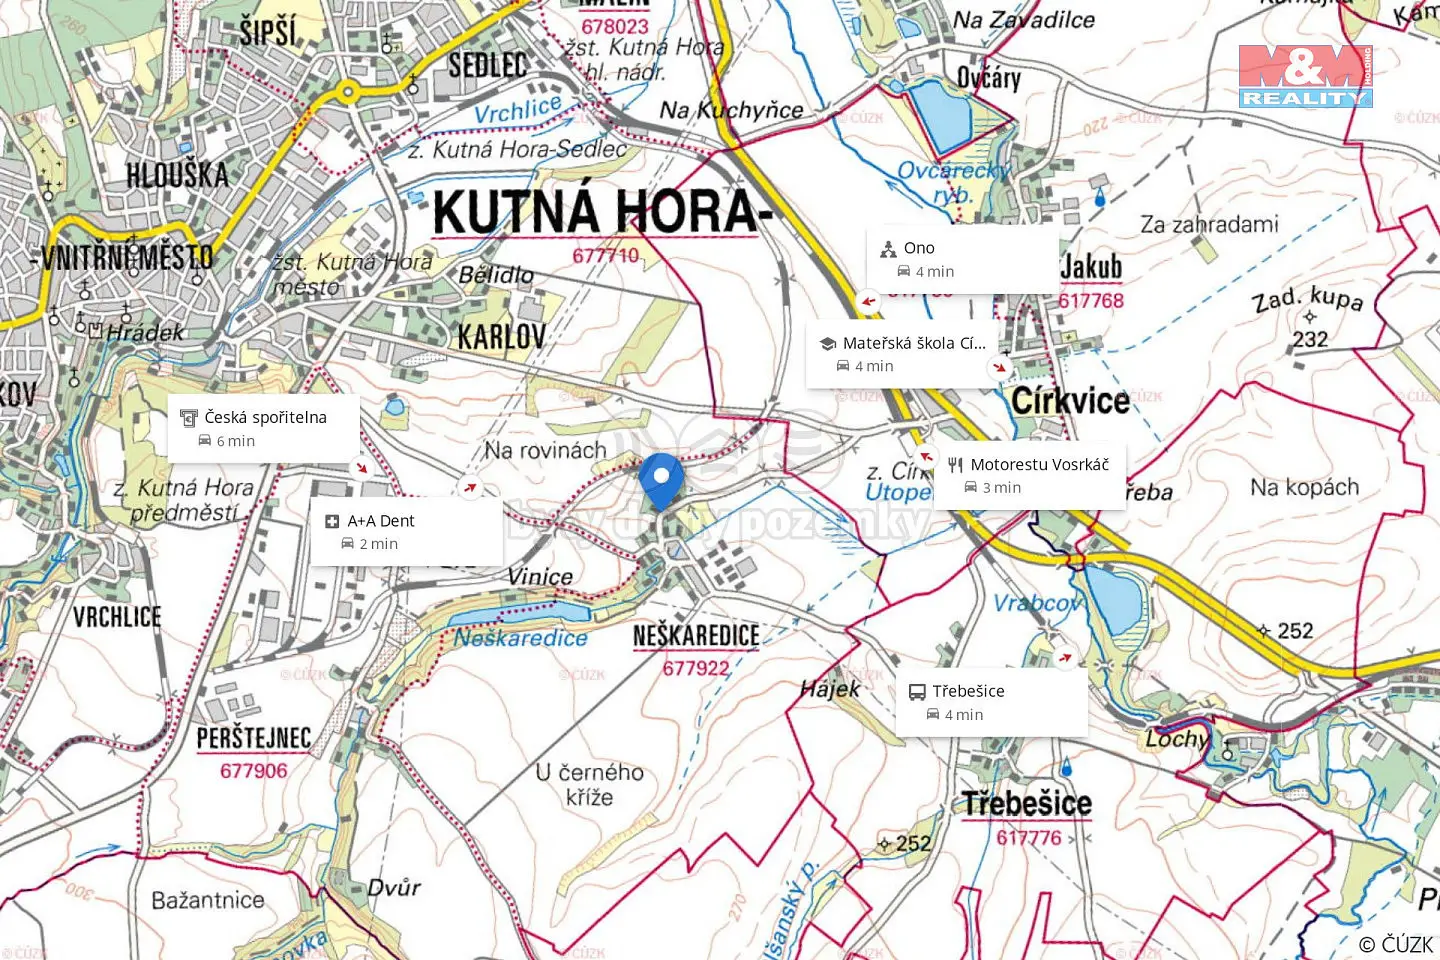 Kutná Hora - Neškaredice